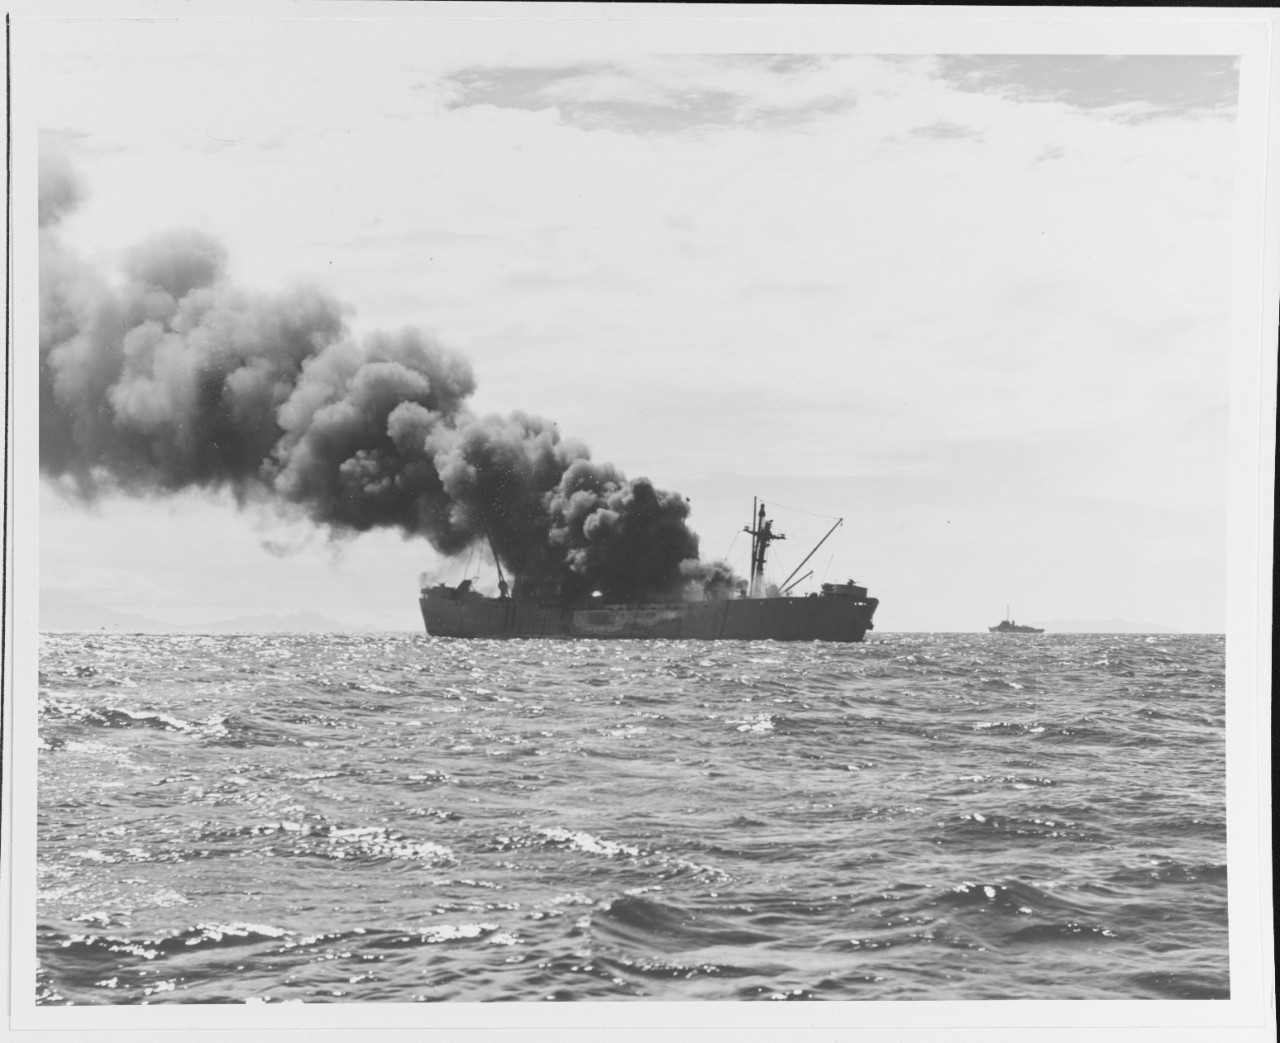 A "Liberty" ship burning off Guadalcanal